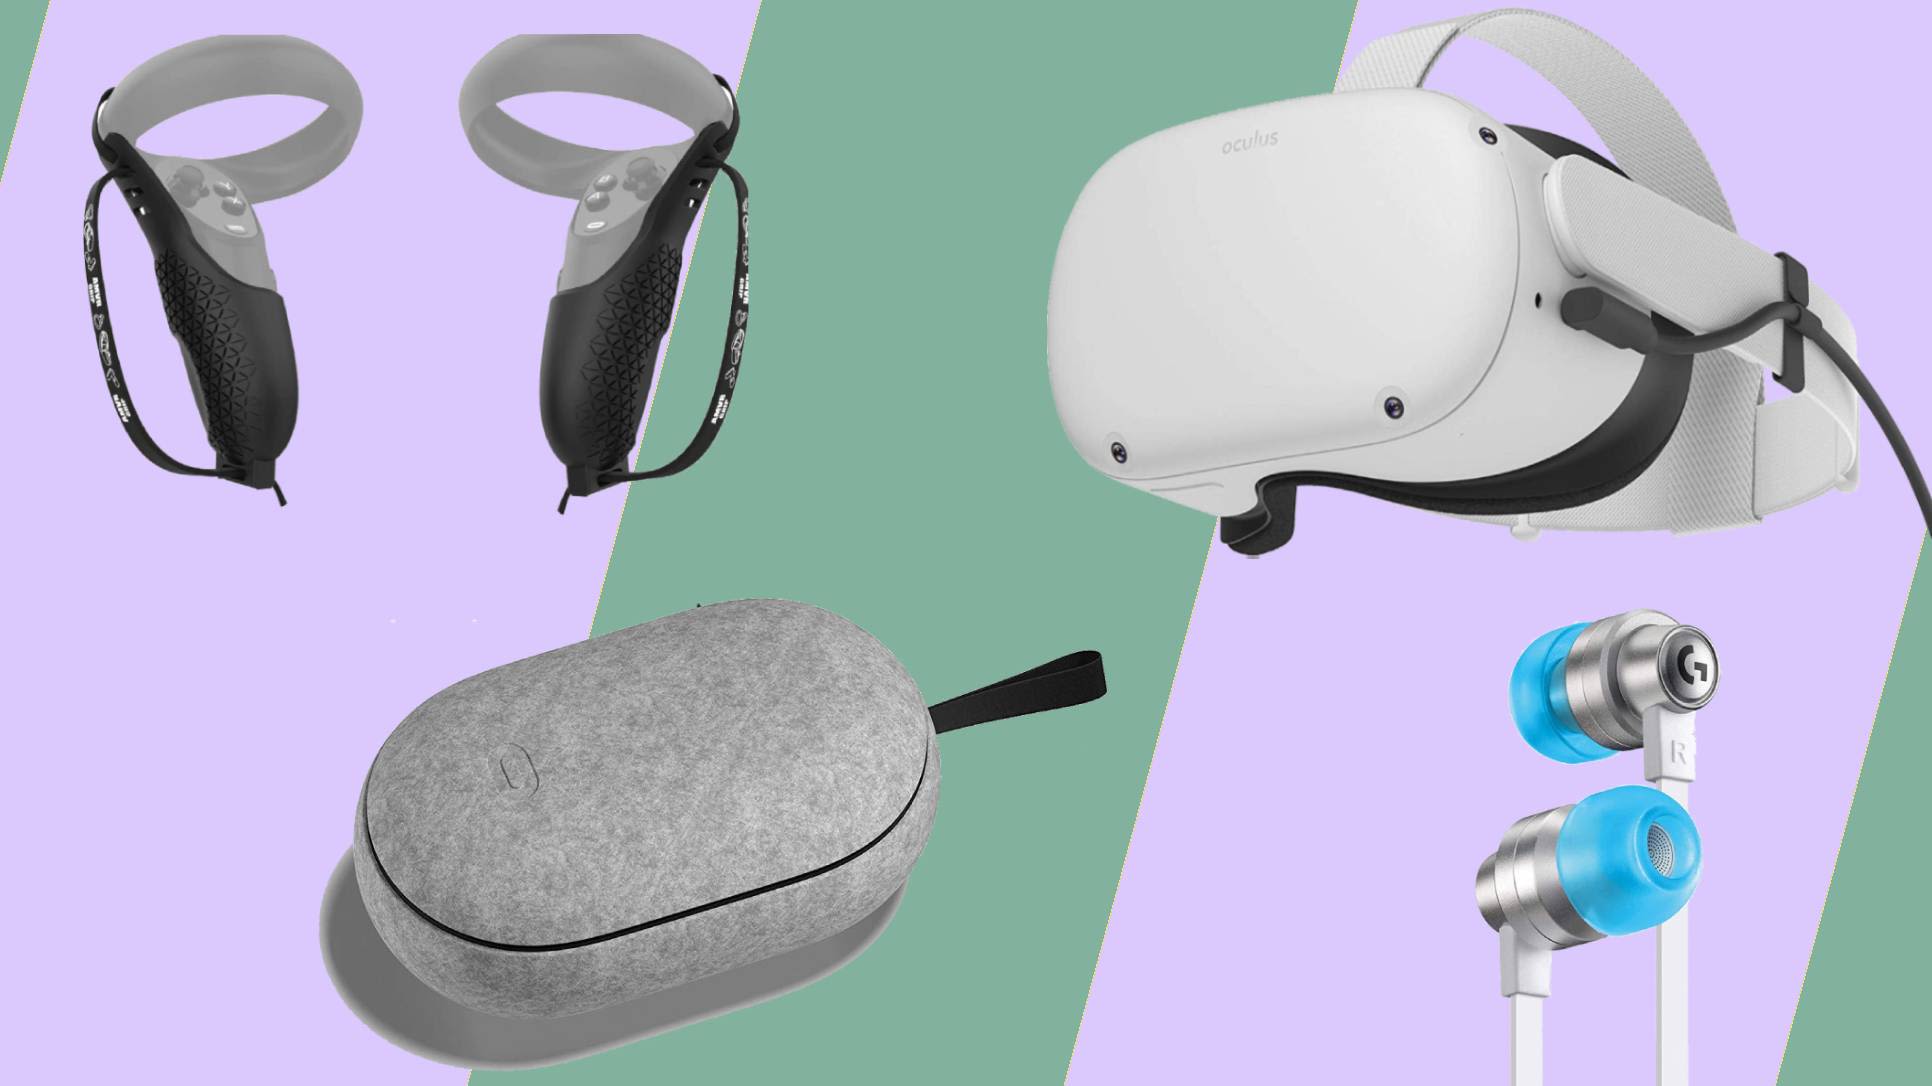 Best Oculus Quest 2 accessories | Underscored